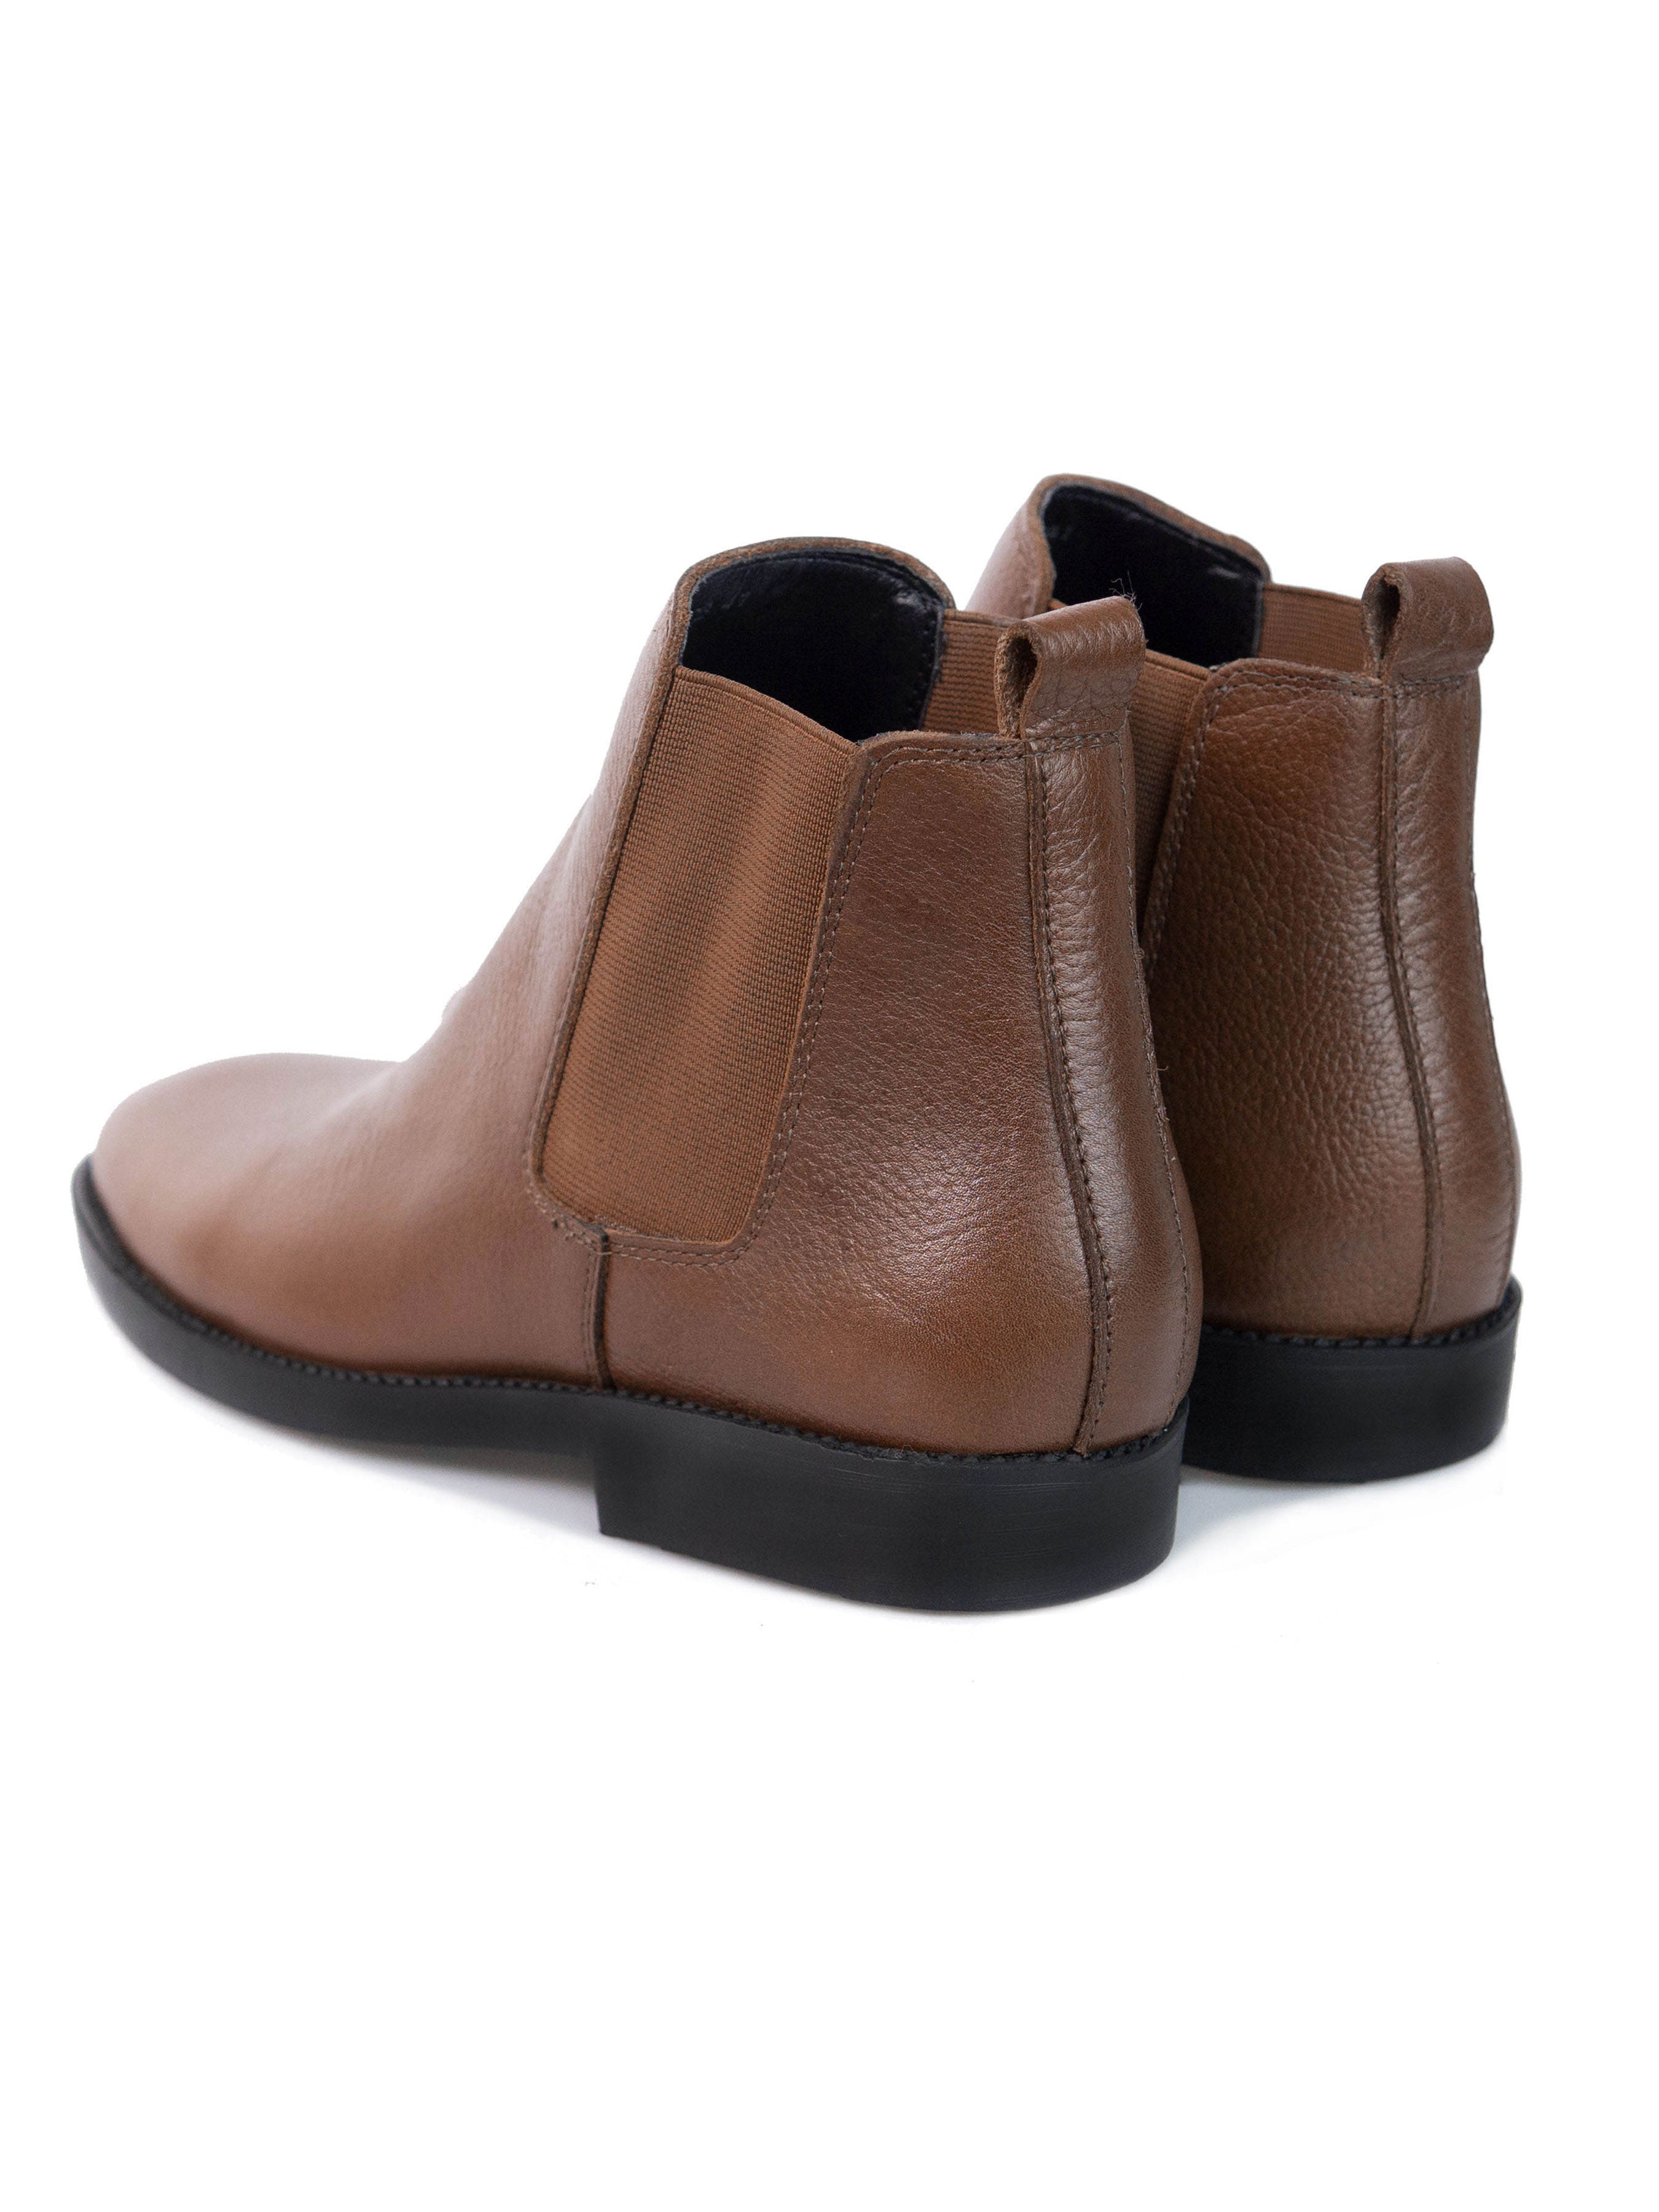 Chelsea Boots - Tobacco Brown Pebble Grain Leather (Crepe Sole) - Zeve Shoes